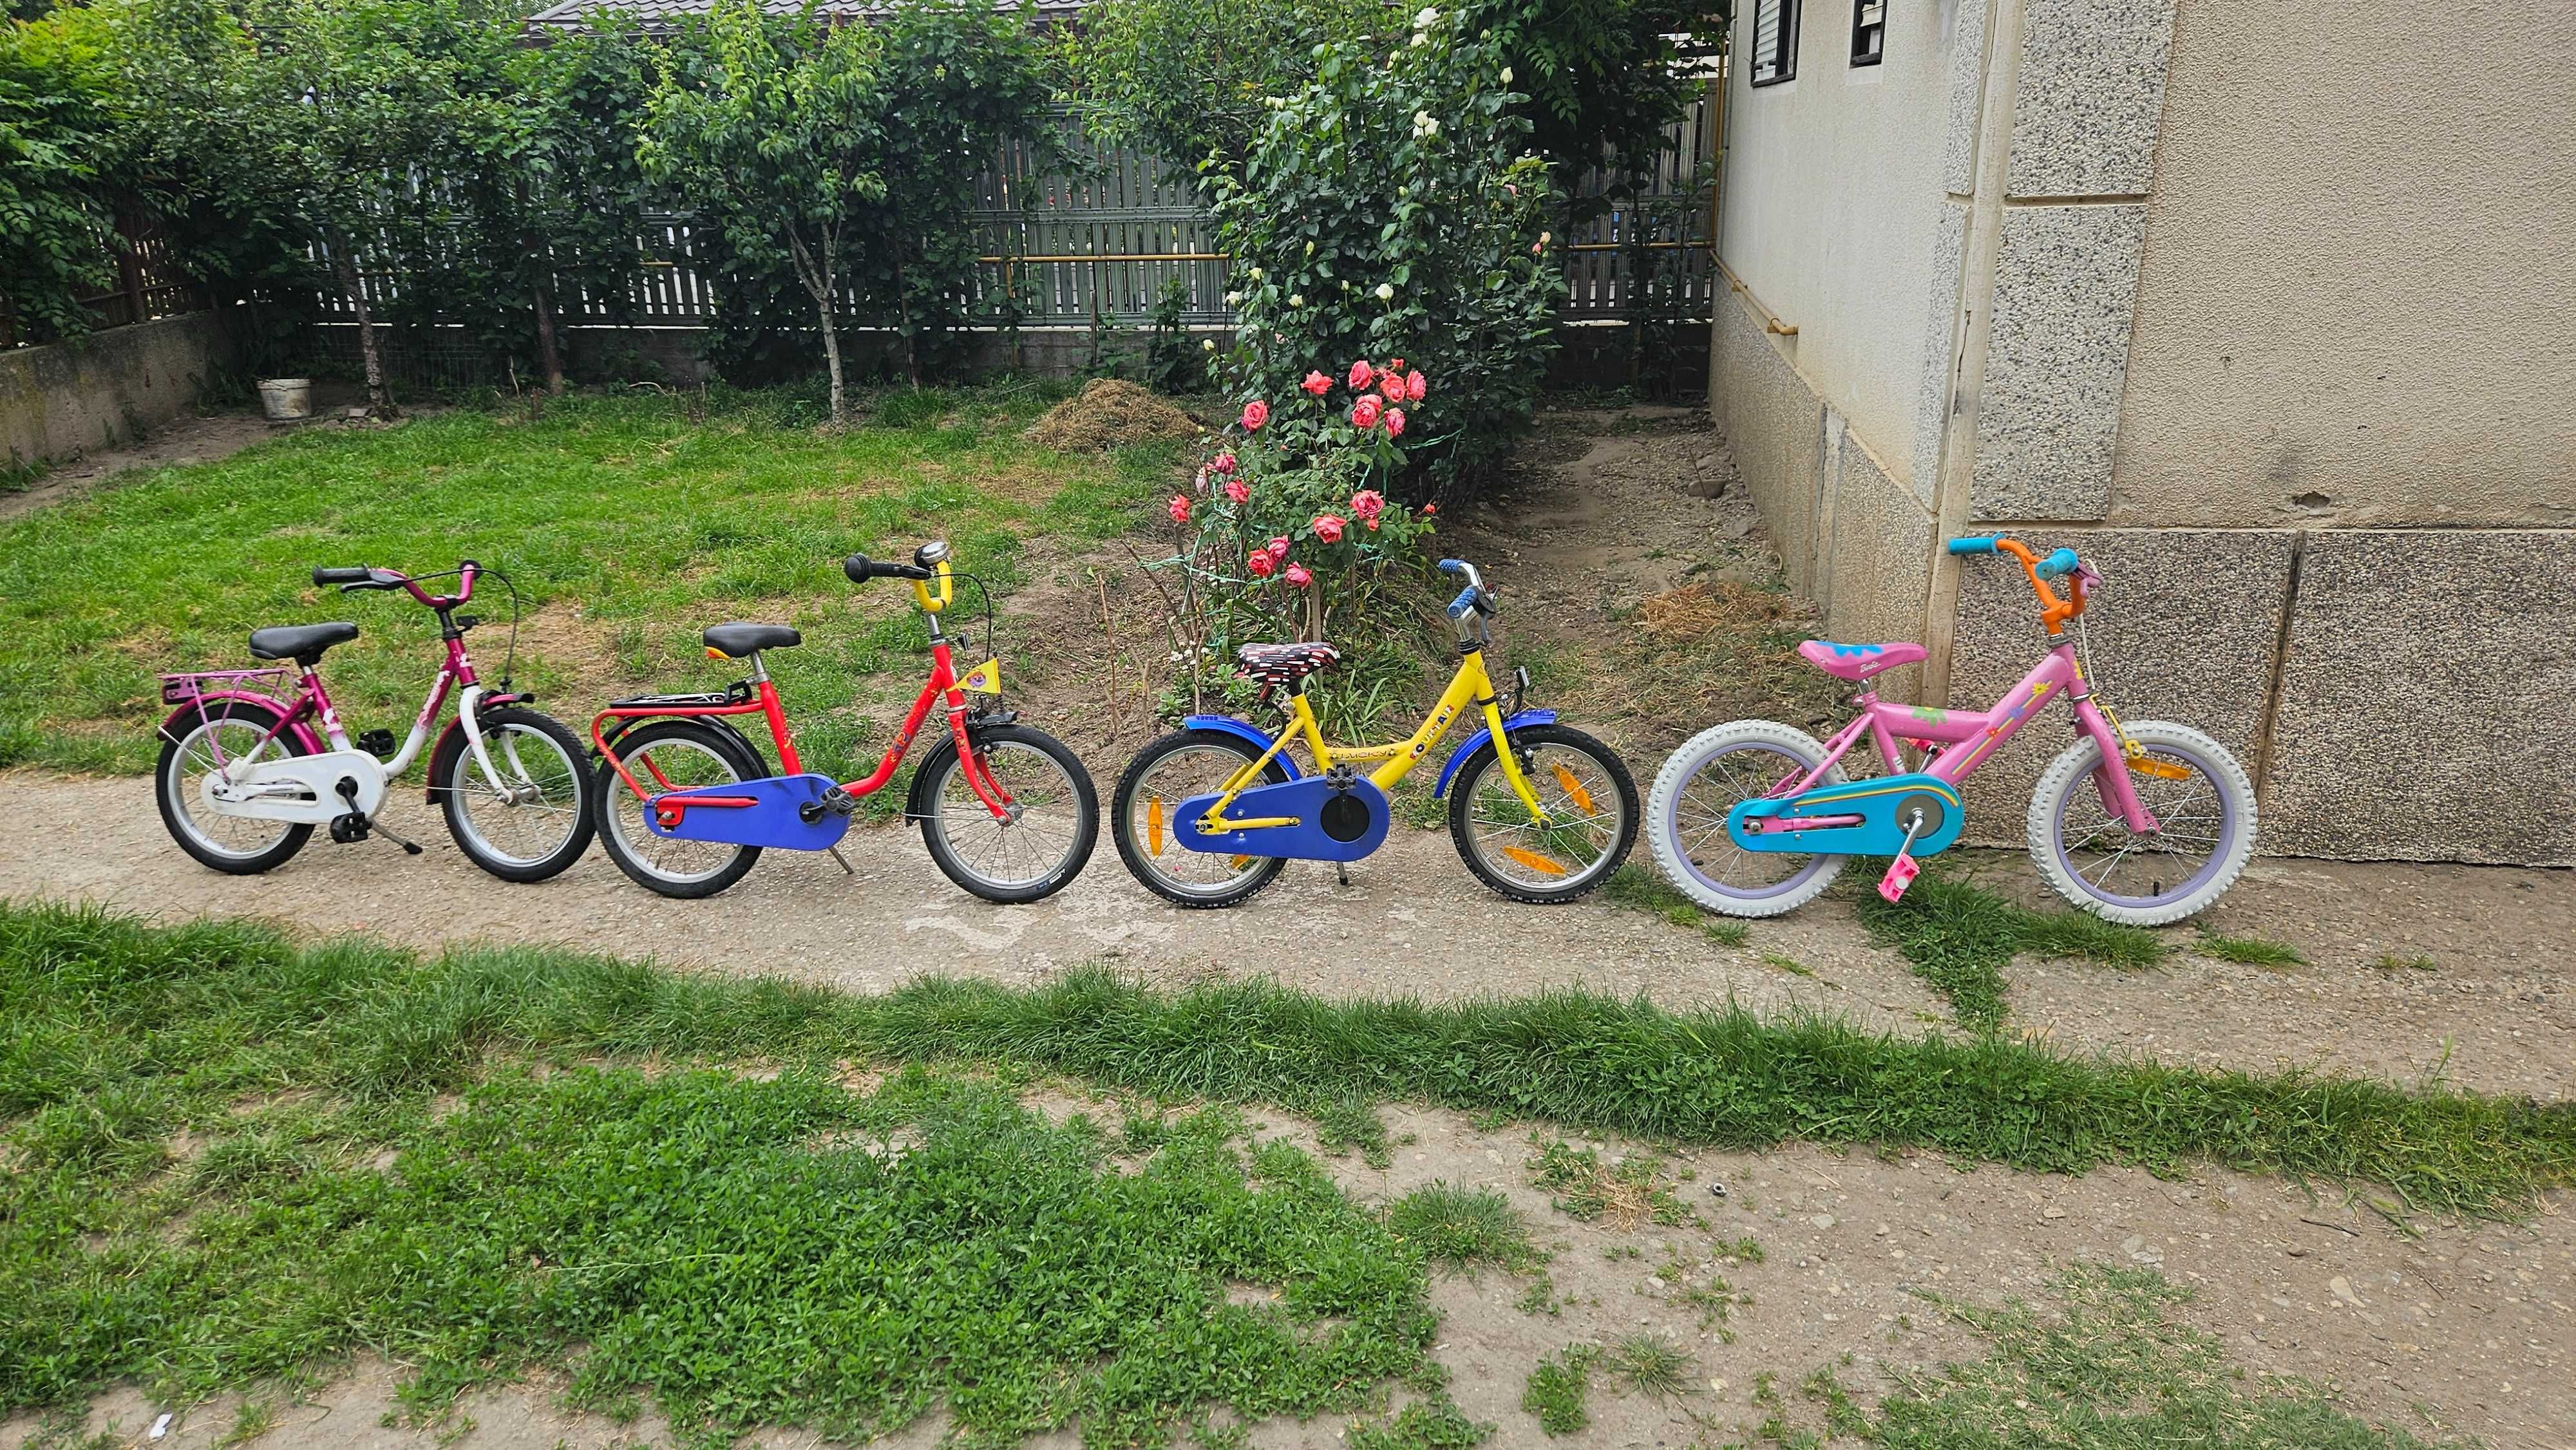 Bicicleta copii 16 inchi(4,5-7 ani),diverse modele,single speed,fr. cl